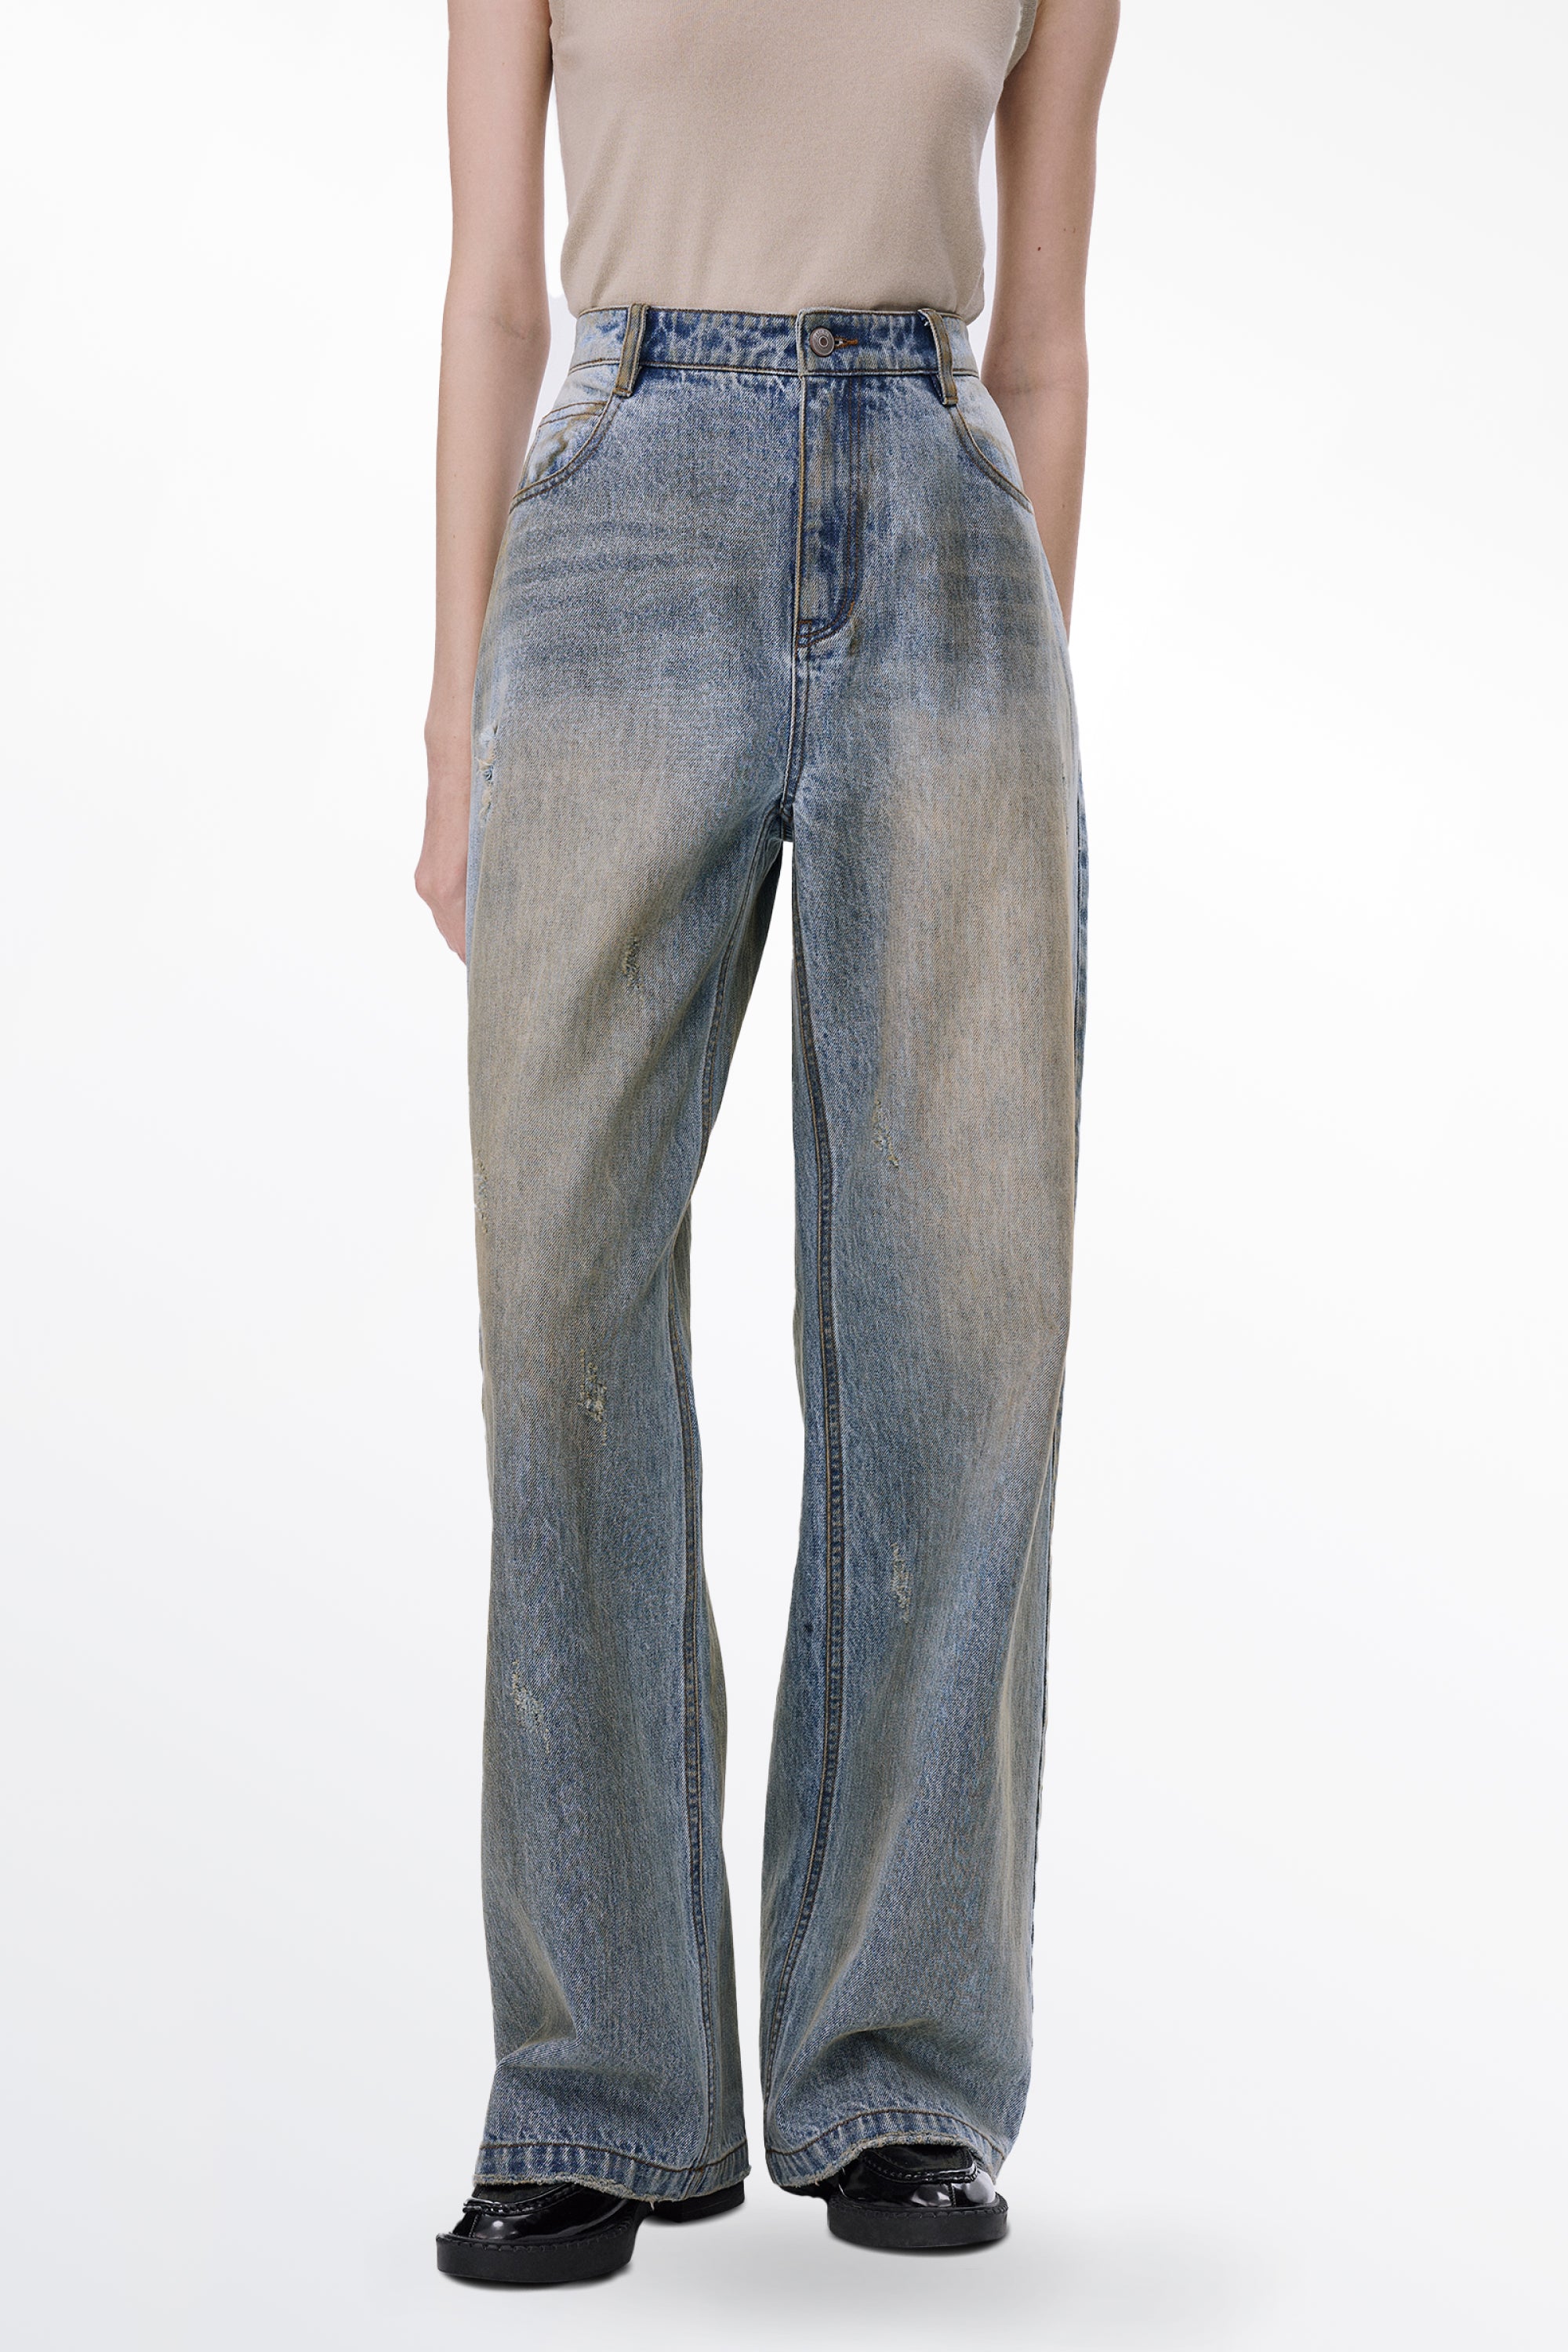 Rhea Distressed Jeans in Cotton Denim